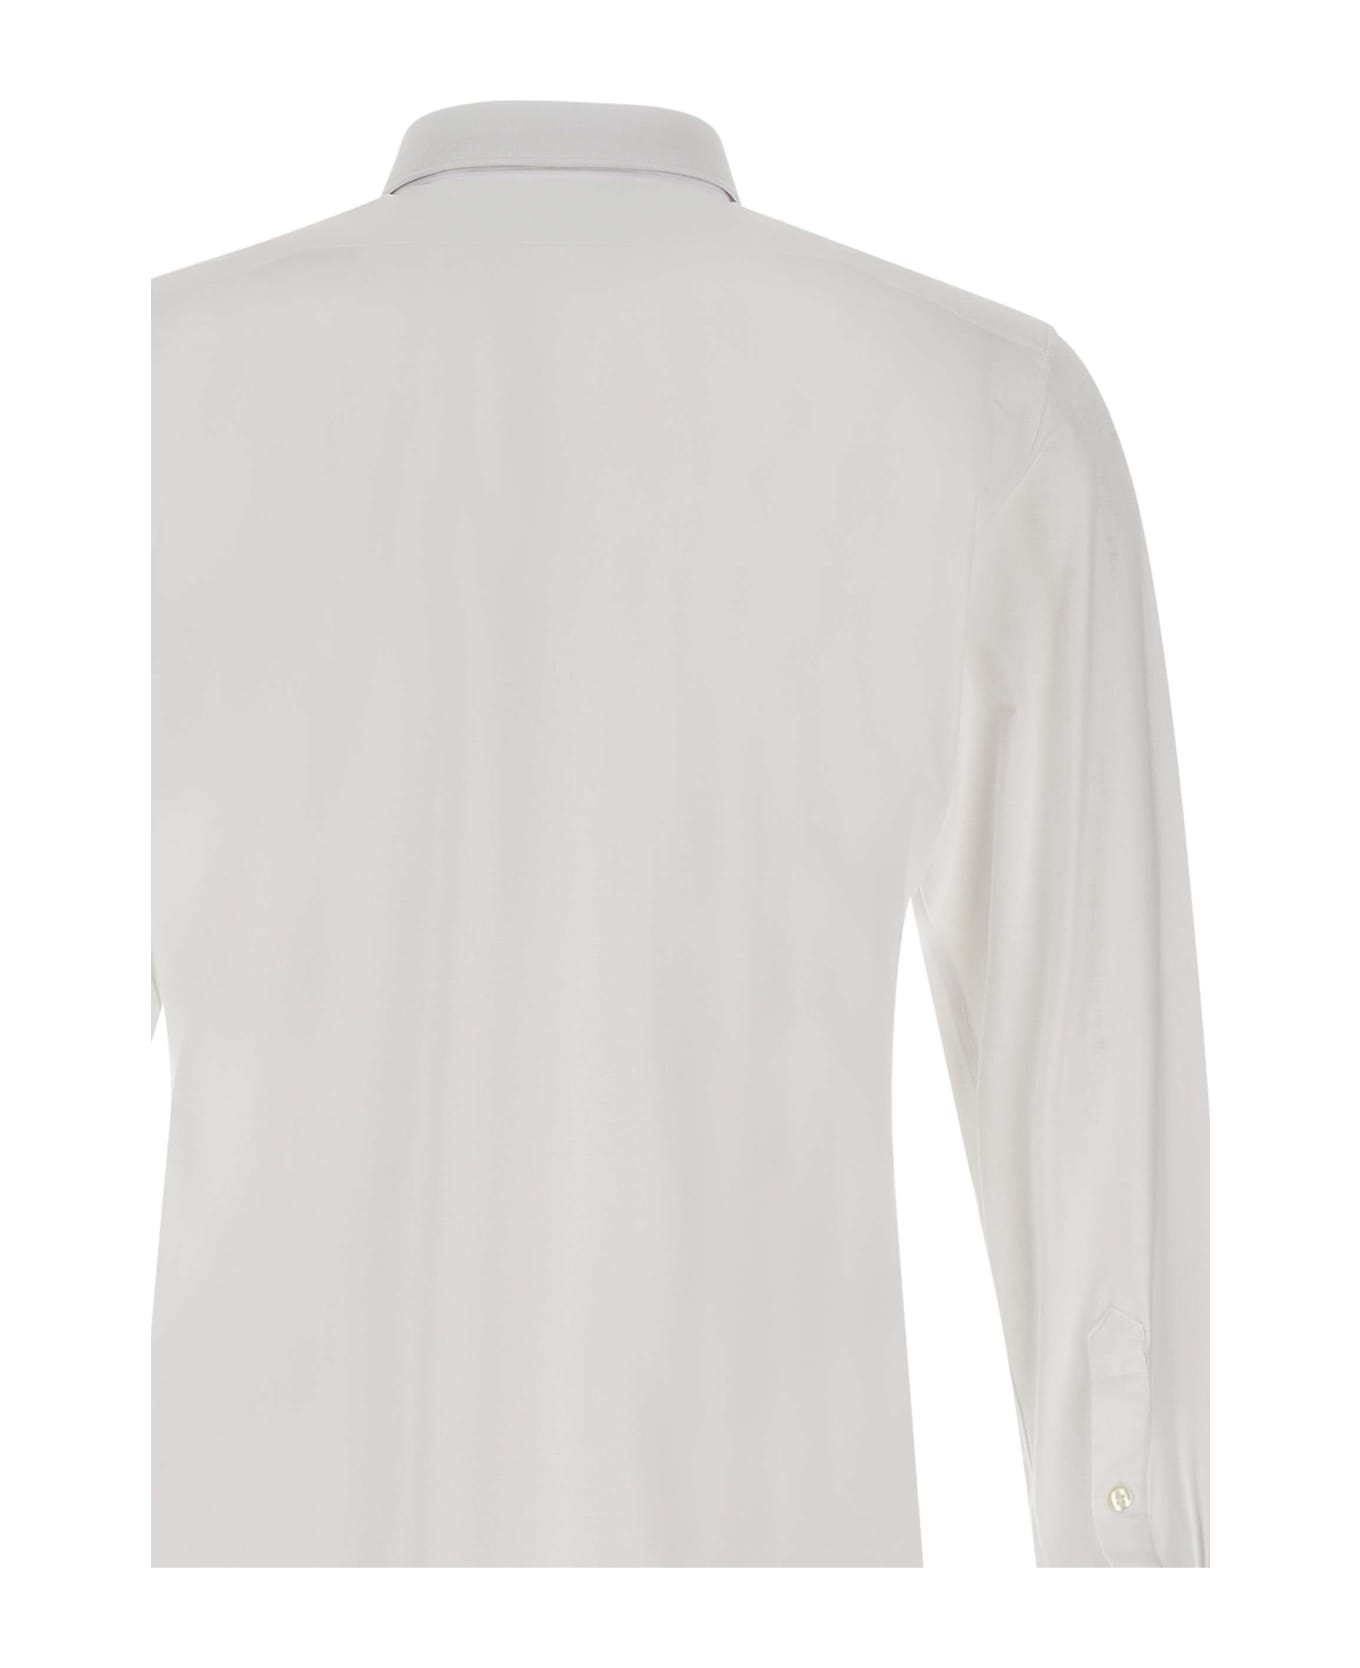 RRD - Roberto Ricci Design "oxford Open" Shirt - WHITE